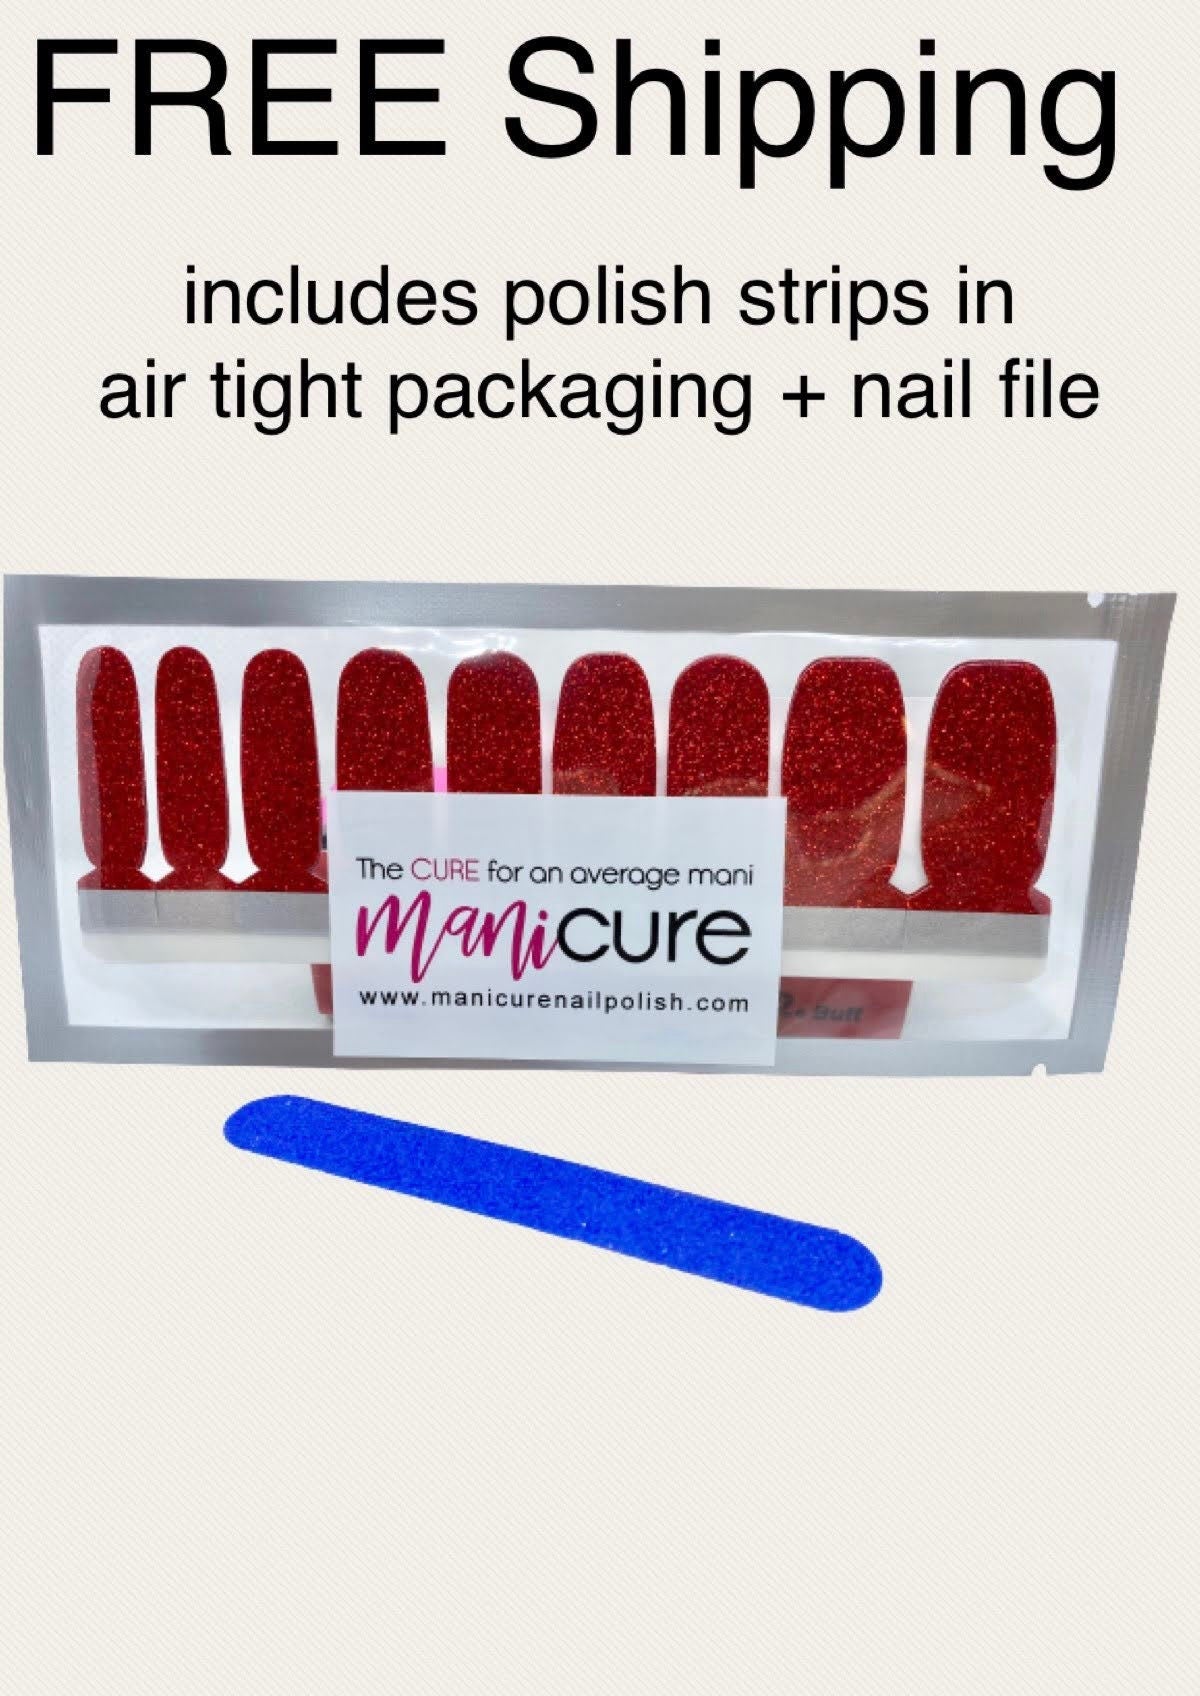 Mardi Gra Sparkle Glitter, ManiCURE  Real Nail Polish Strips, Dry Nail Polish, Nail Wraps, Stickers, Long Lasting, Non Toxic - manicurenailpolish